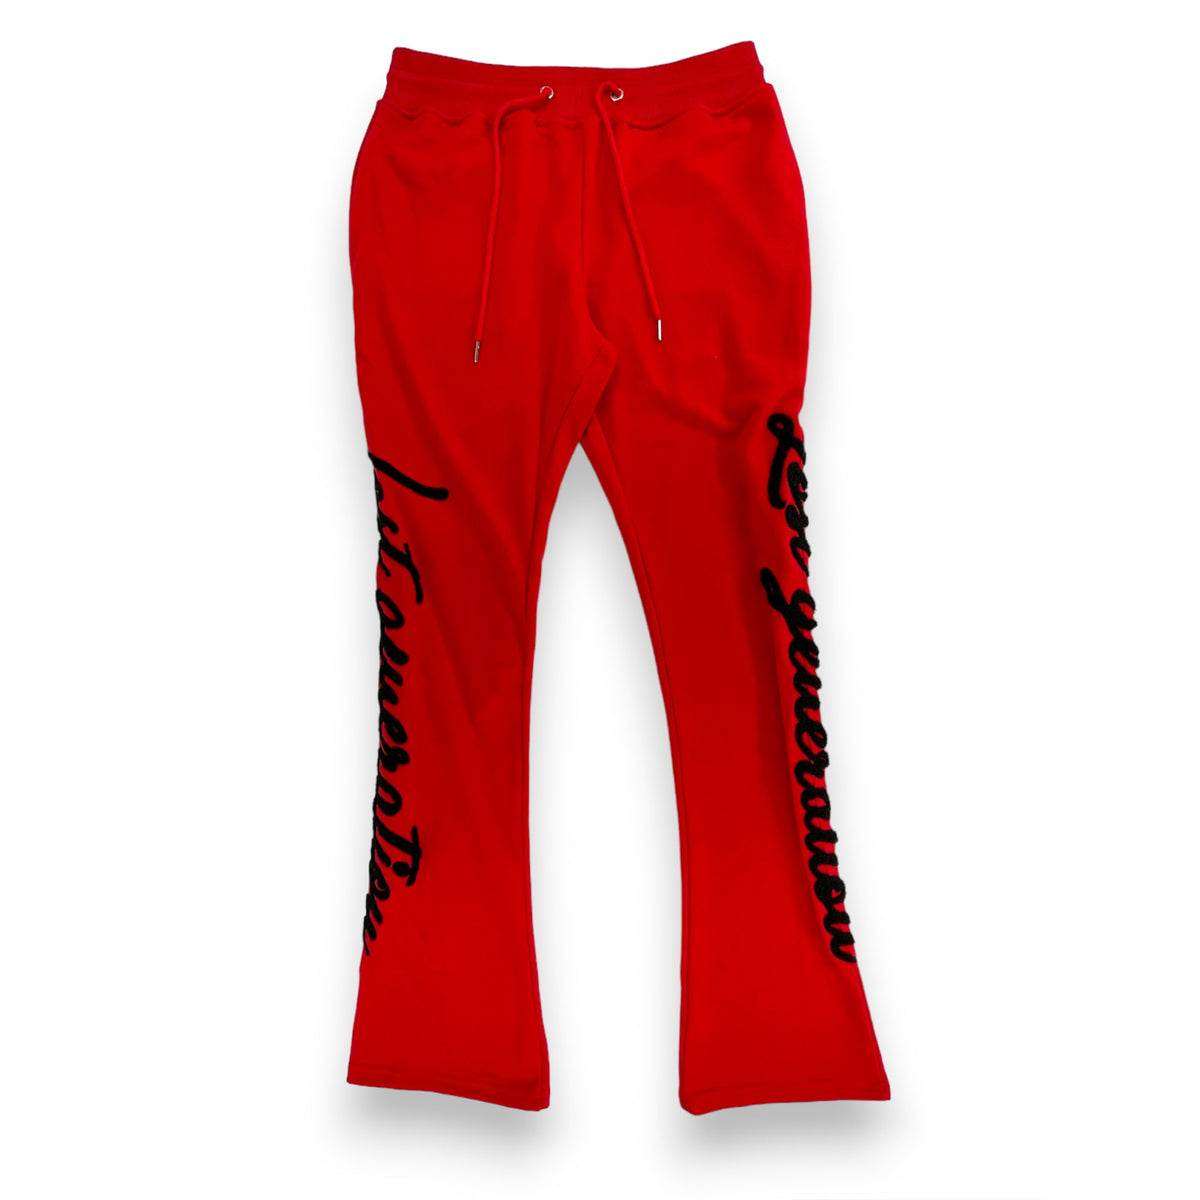 WaiMea Men Lost Generation Sweatpants (Red Black)